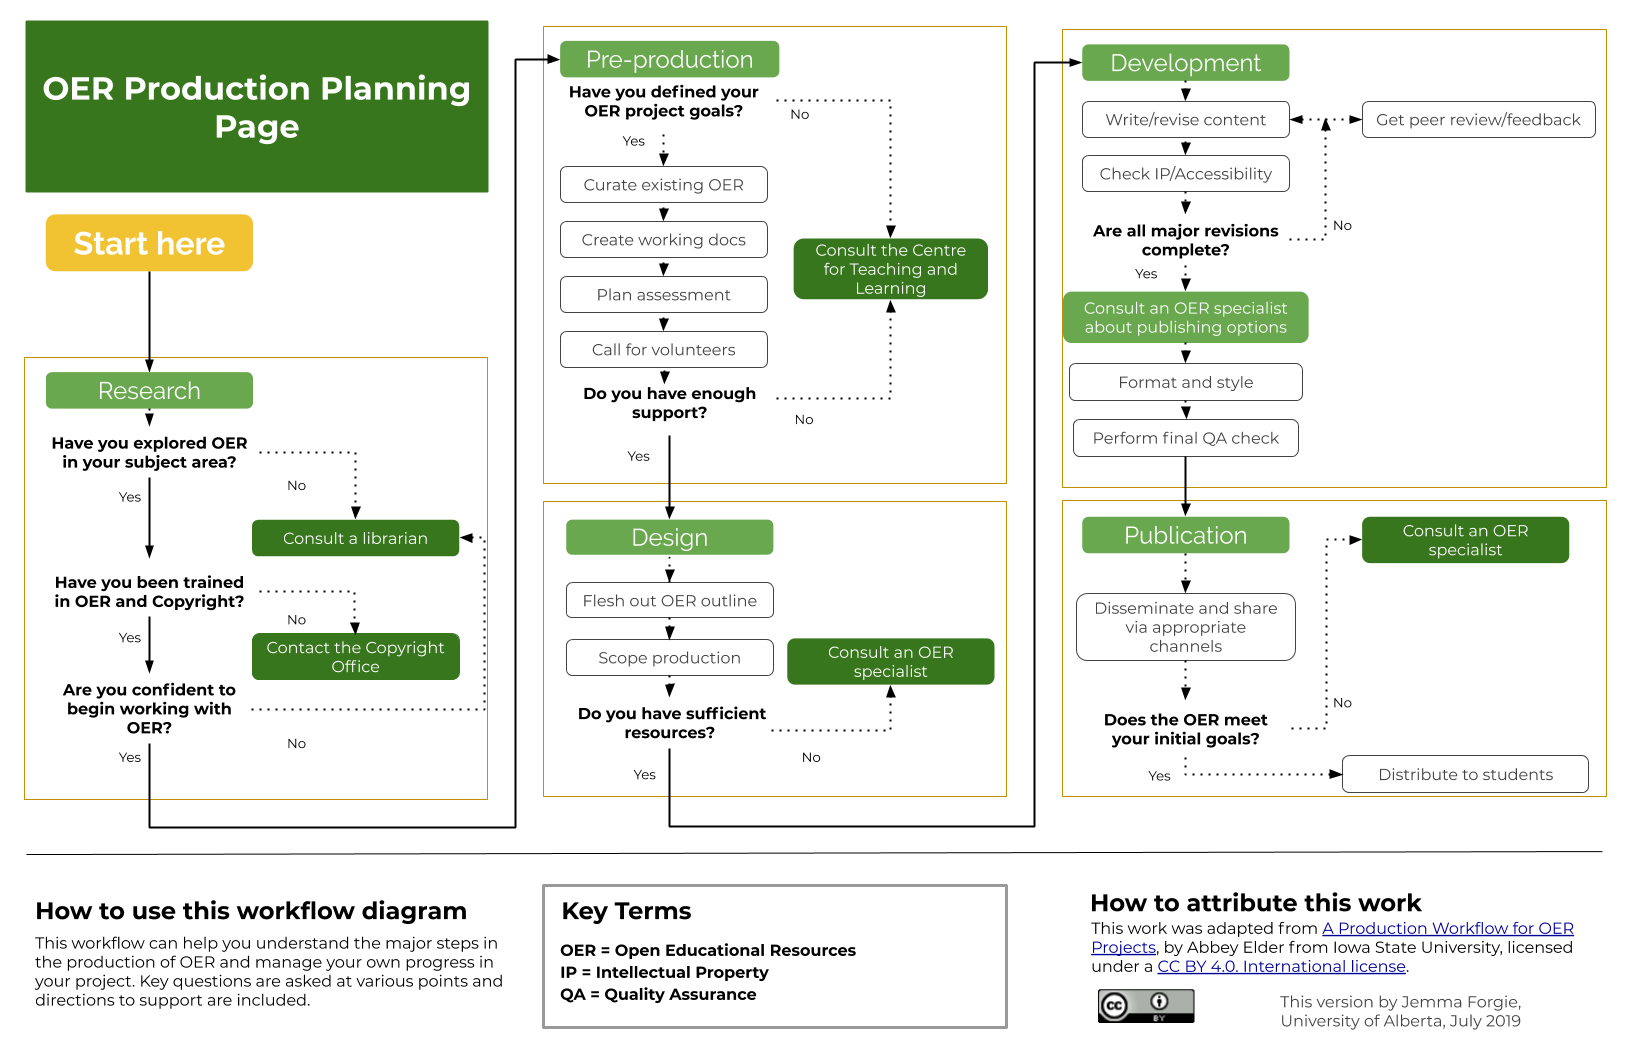 OER production planning framework in a flowchart depicting the major steps for OER adoptions